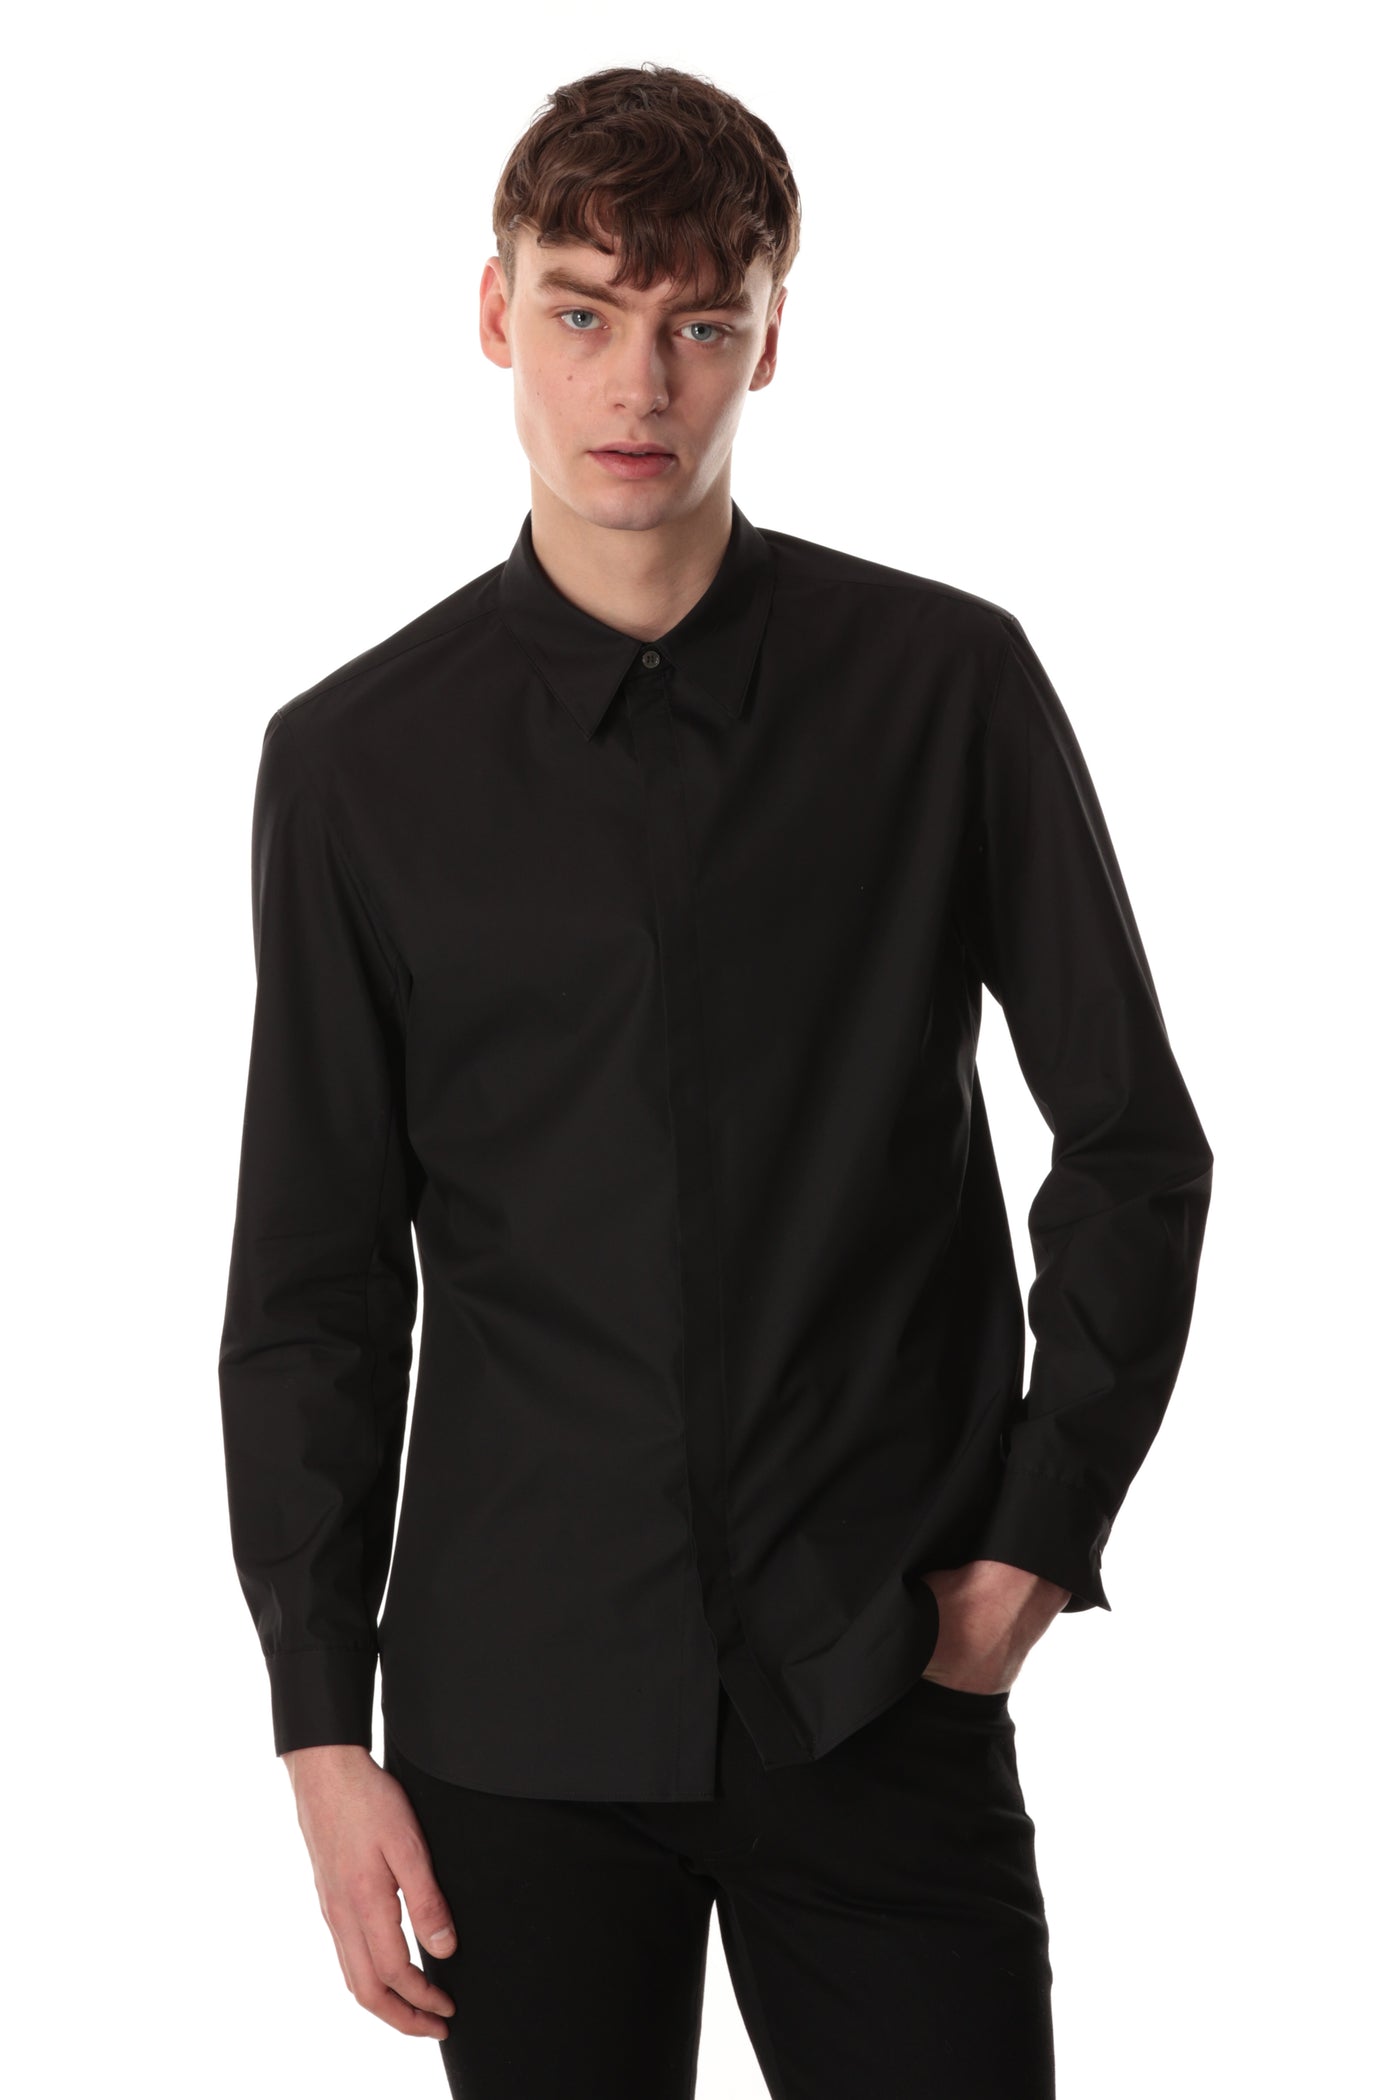 AS32-071 Cotton/Polyester Stretch Dress Shirt